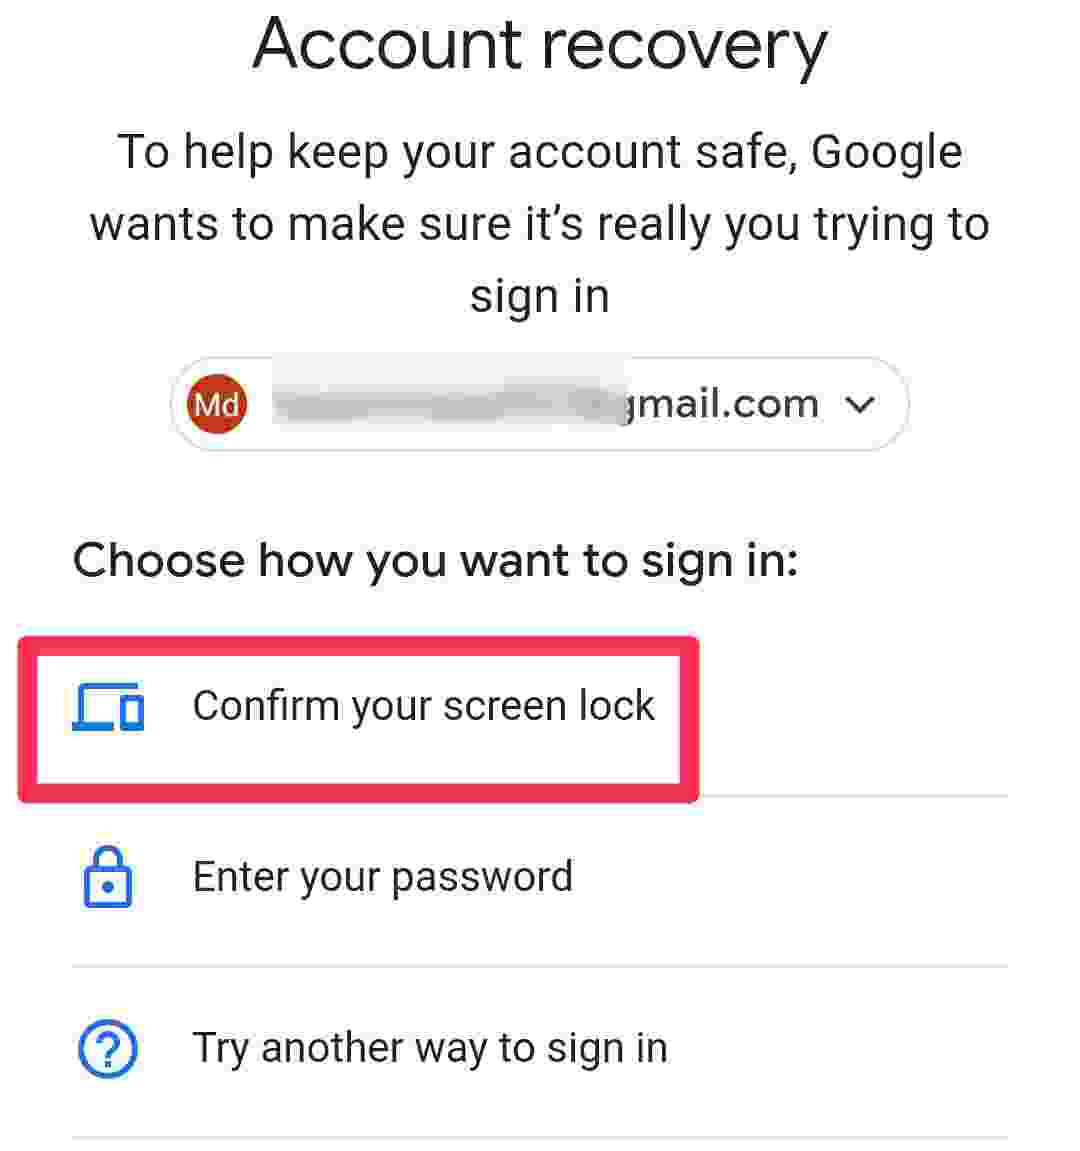 Confirm screen lock